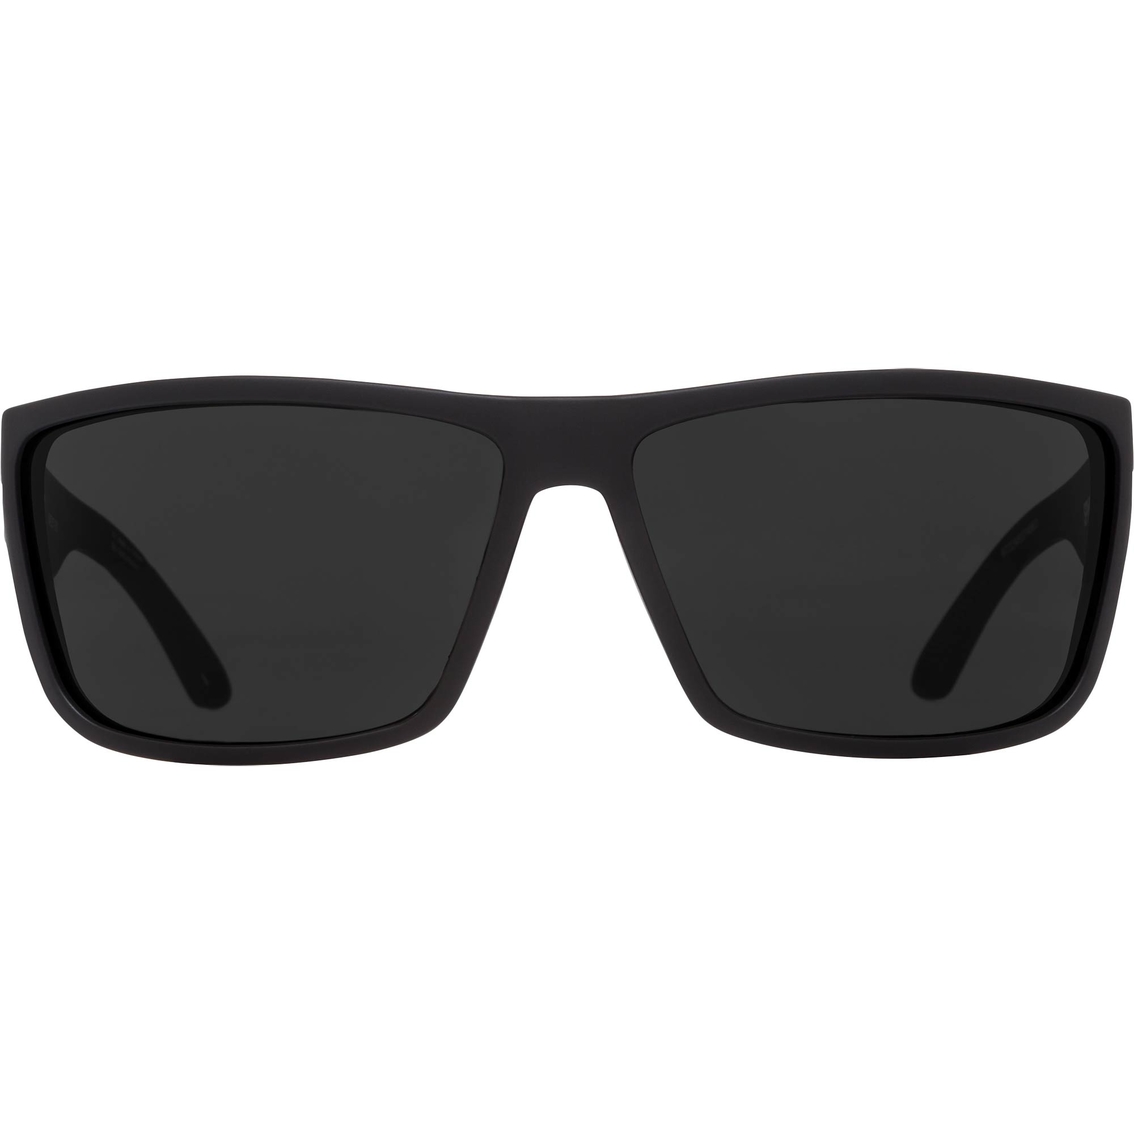 Spy Optic Rocky Standard Issue Sunglasses 6800000000106 | Sunglasses ...